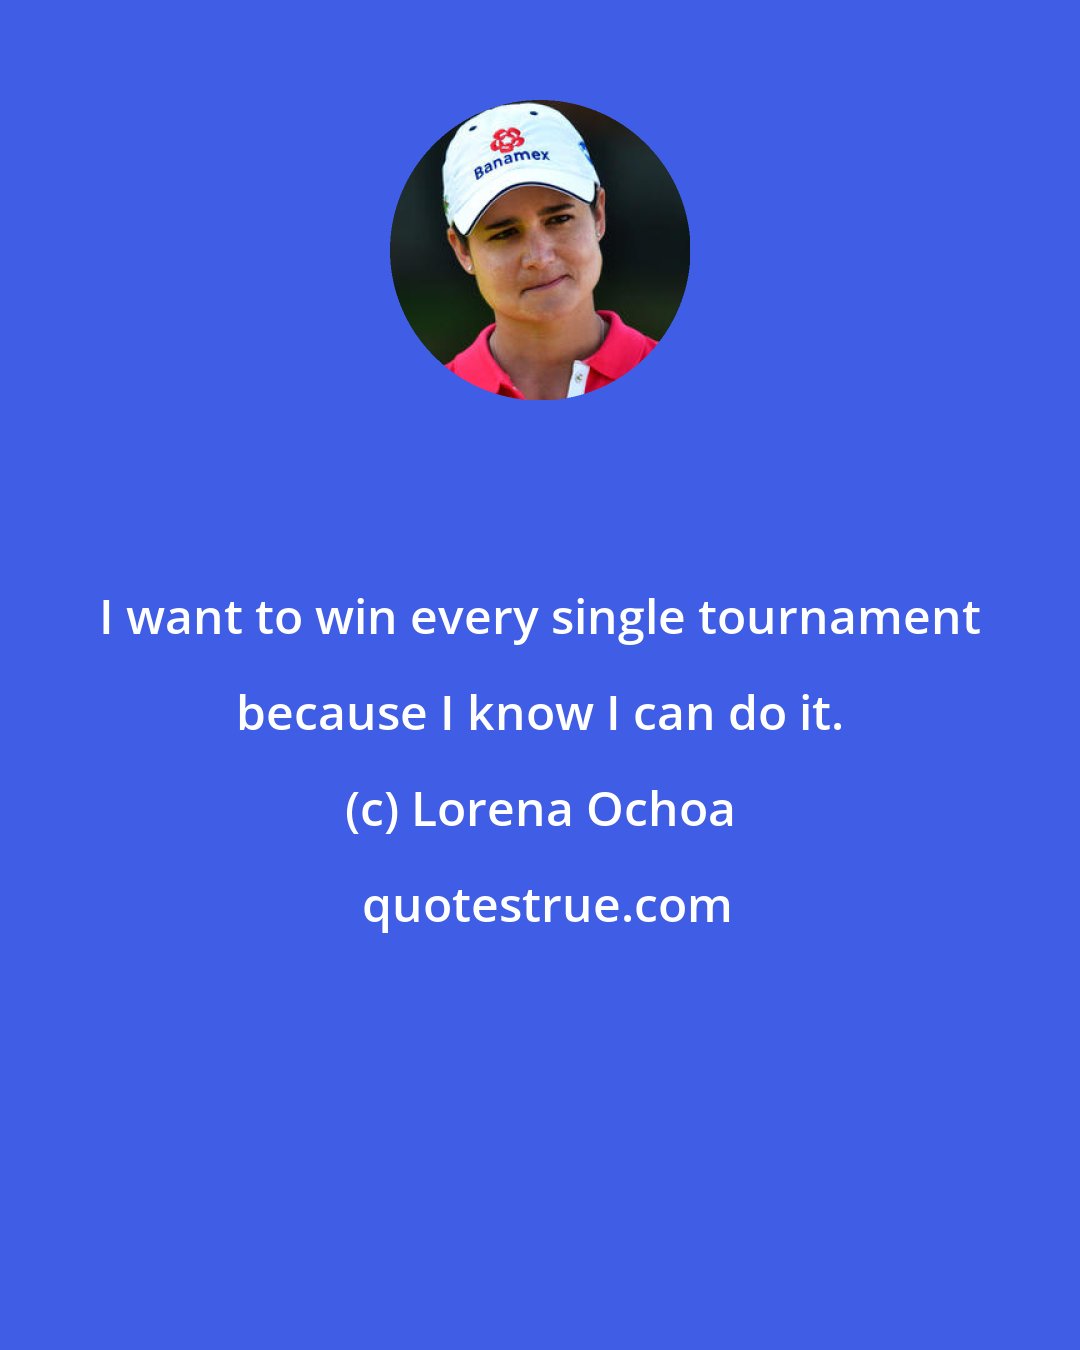 Lorena Ochoa: I want to win every single tournament because I know I can do it.